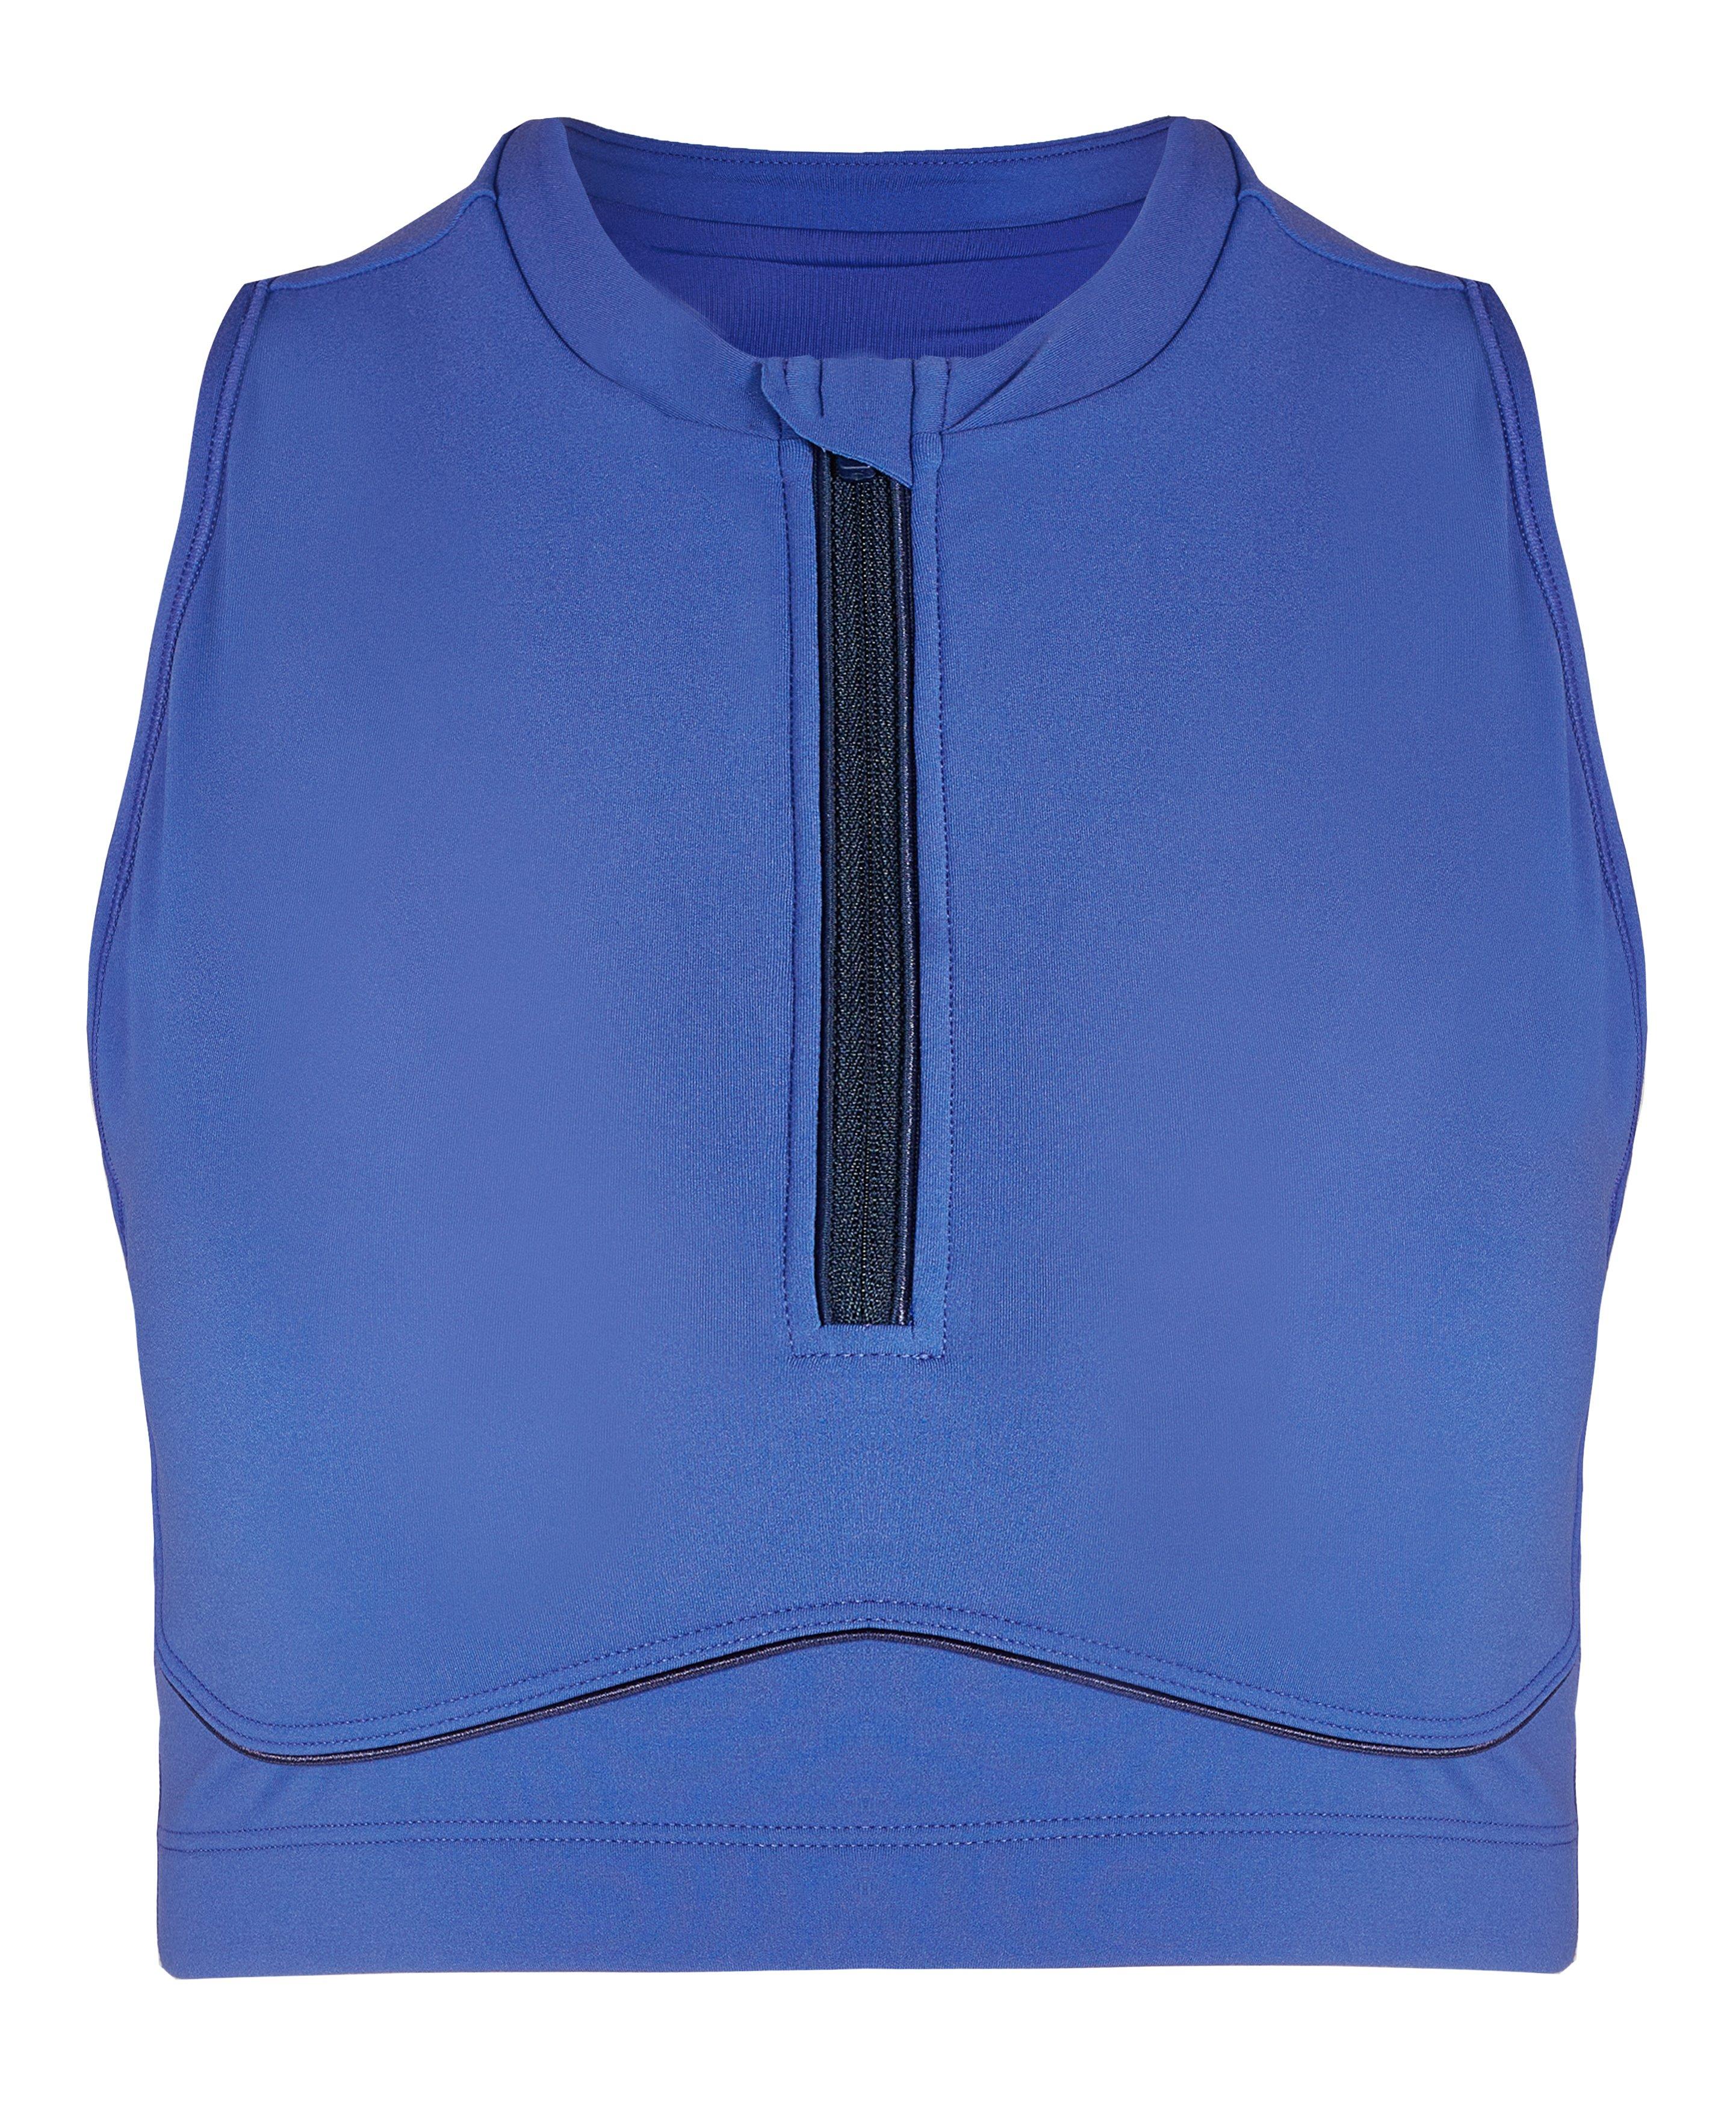 Women's bra Bobypark - SHORE 0 Thin straps Blue - E23